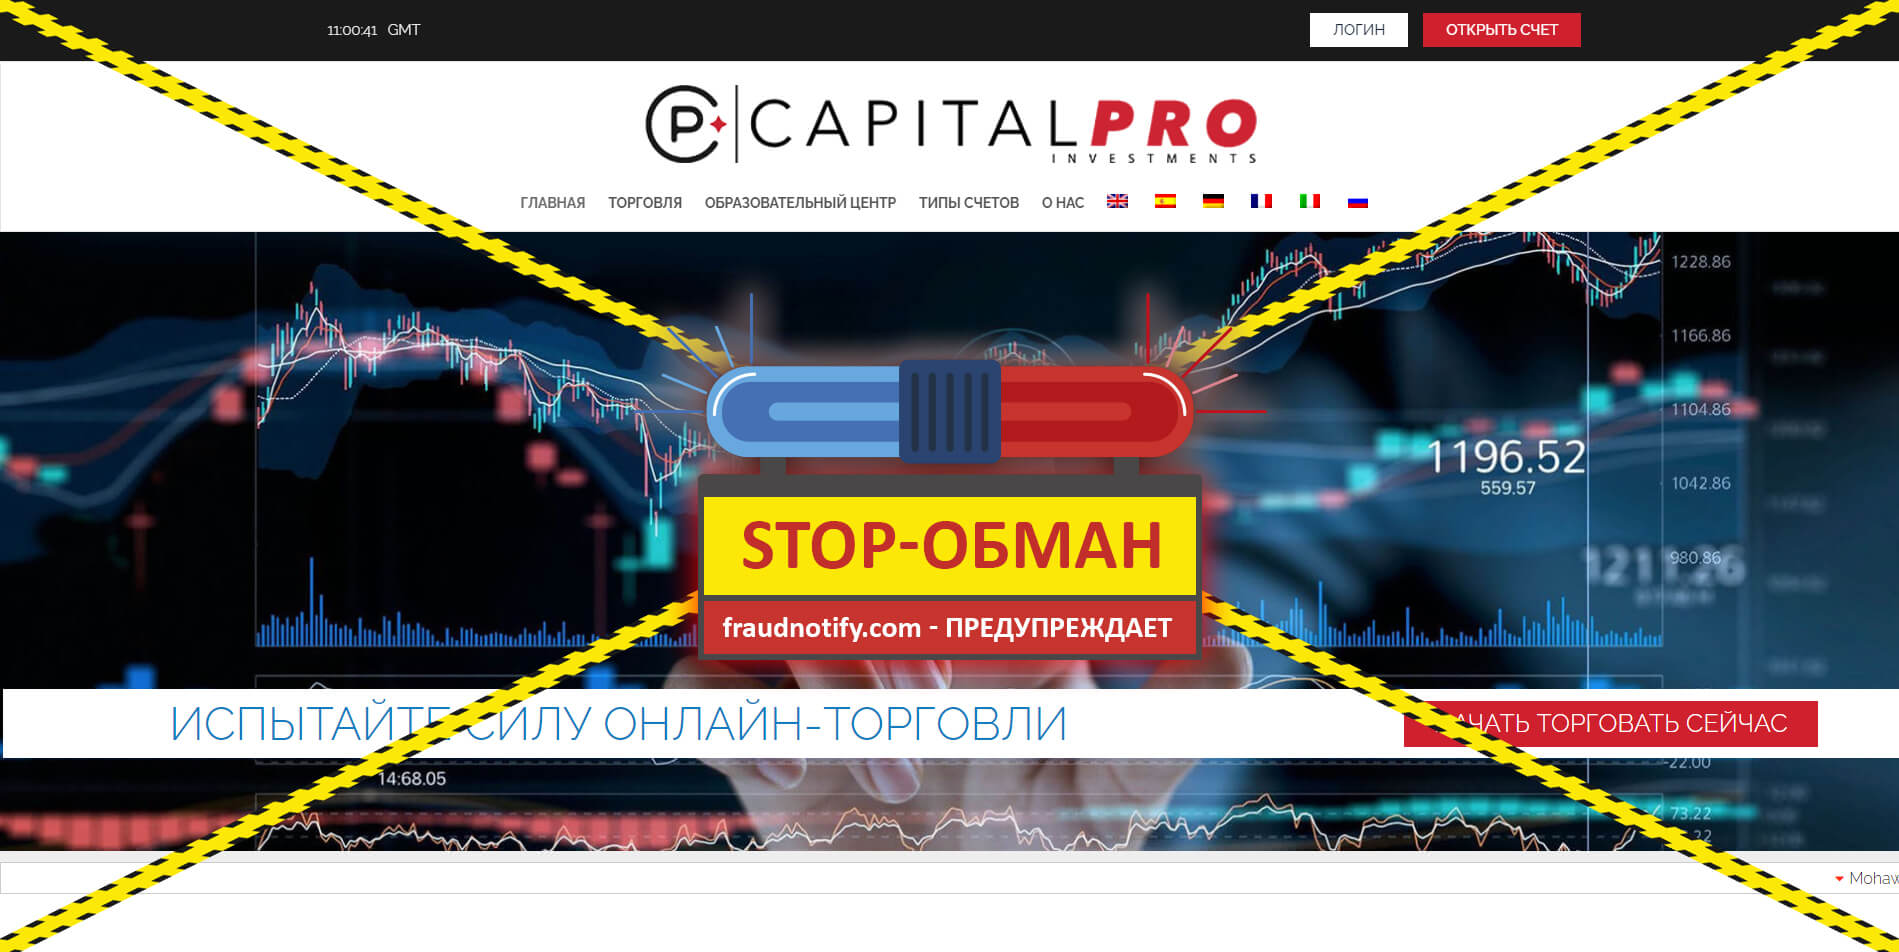 CapitalPro-Inv отзывы